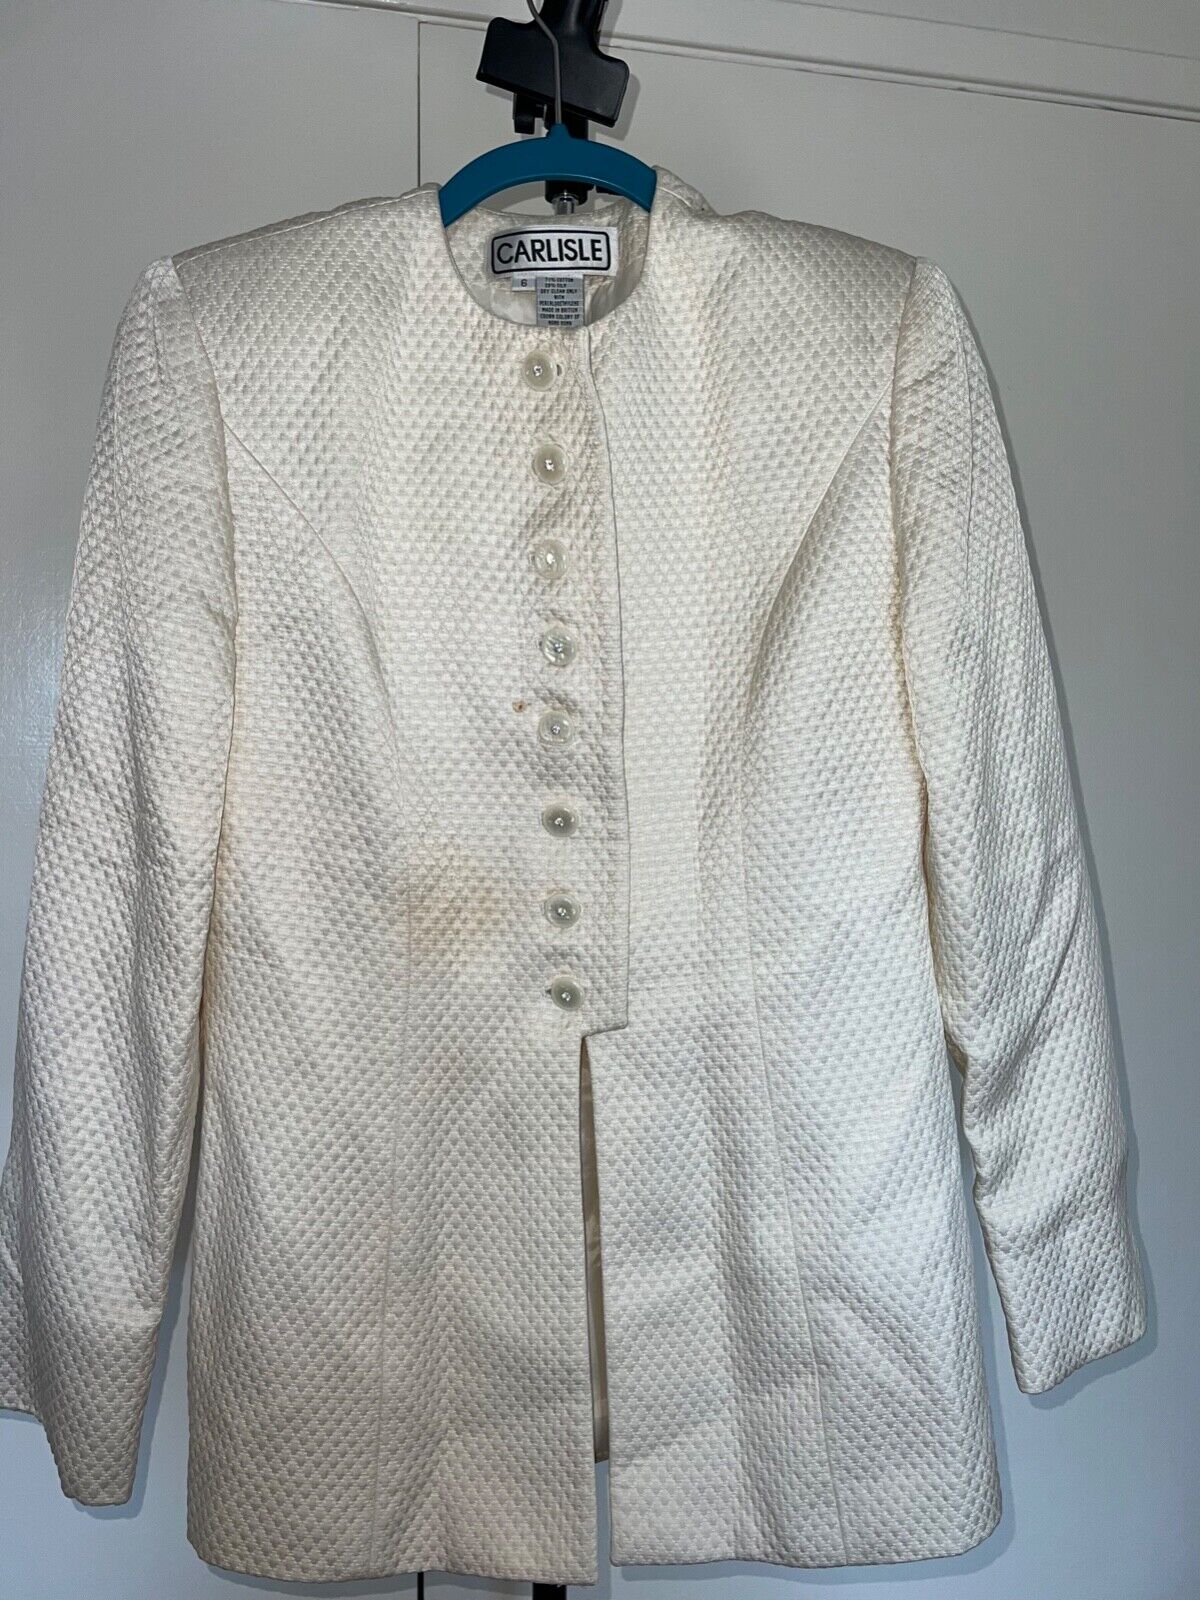 vintage carlisle coat size medium quilt material - great condition 